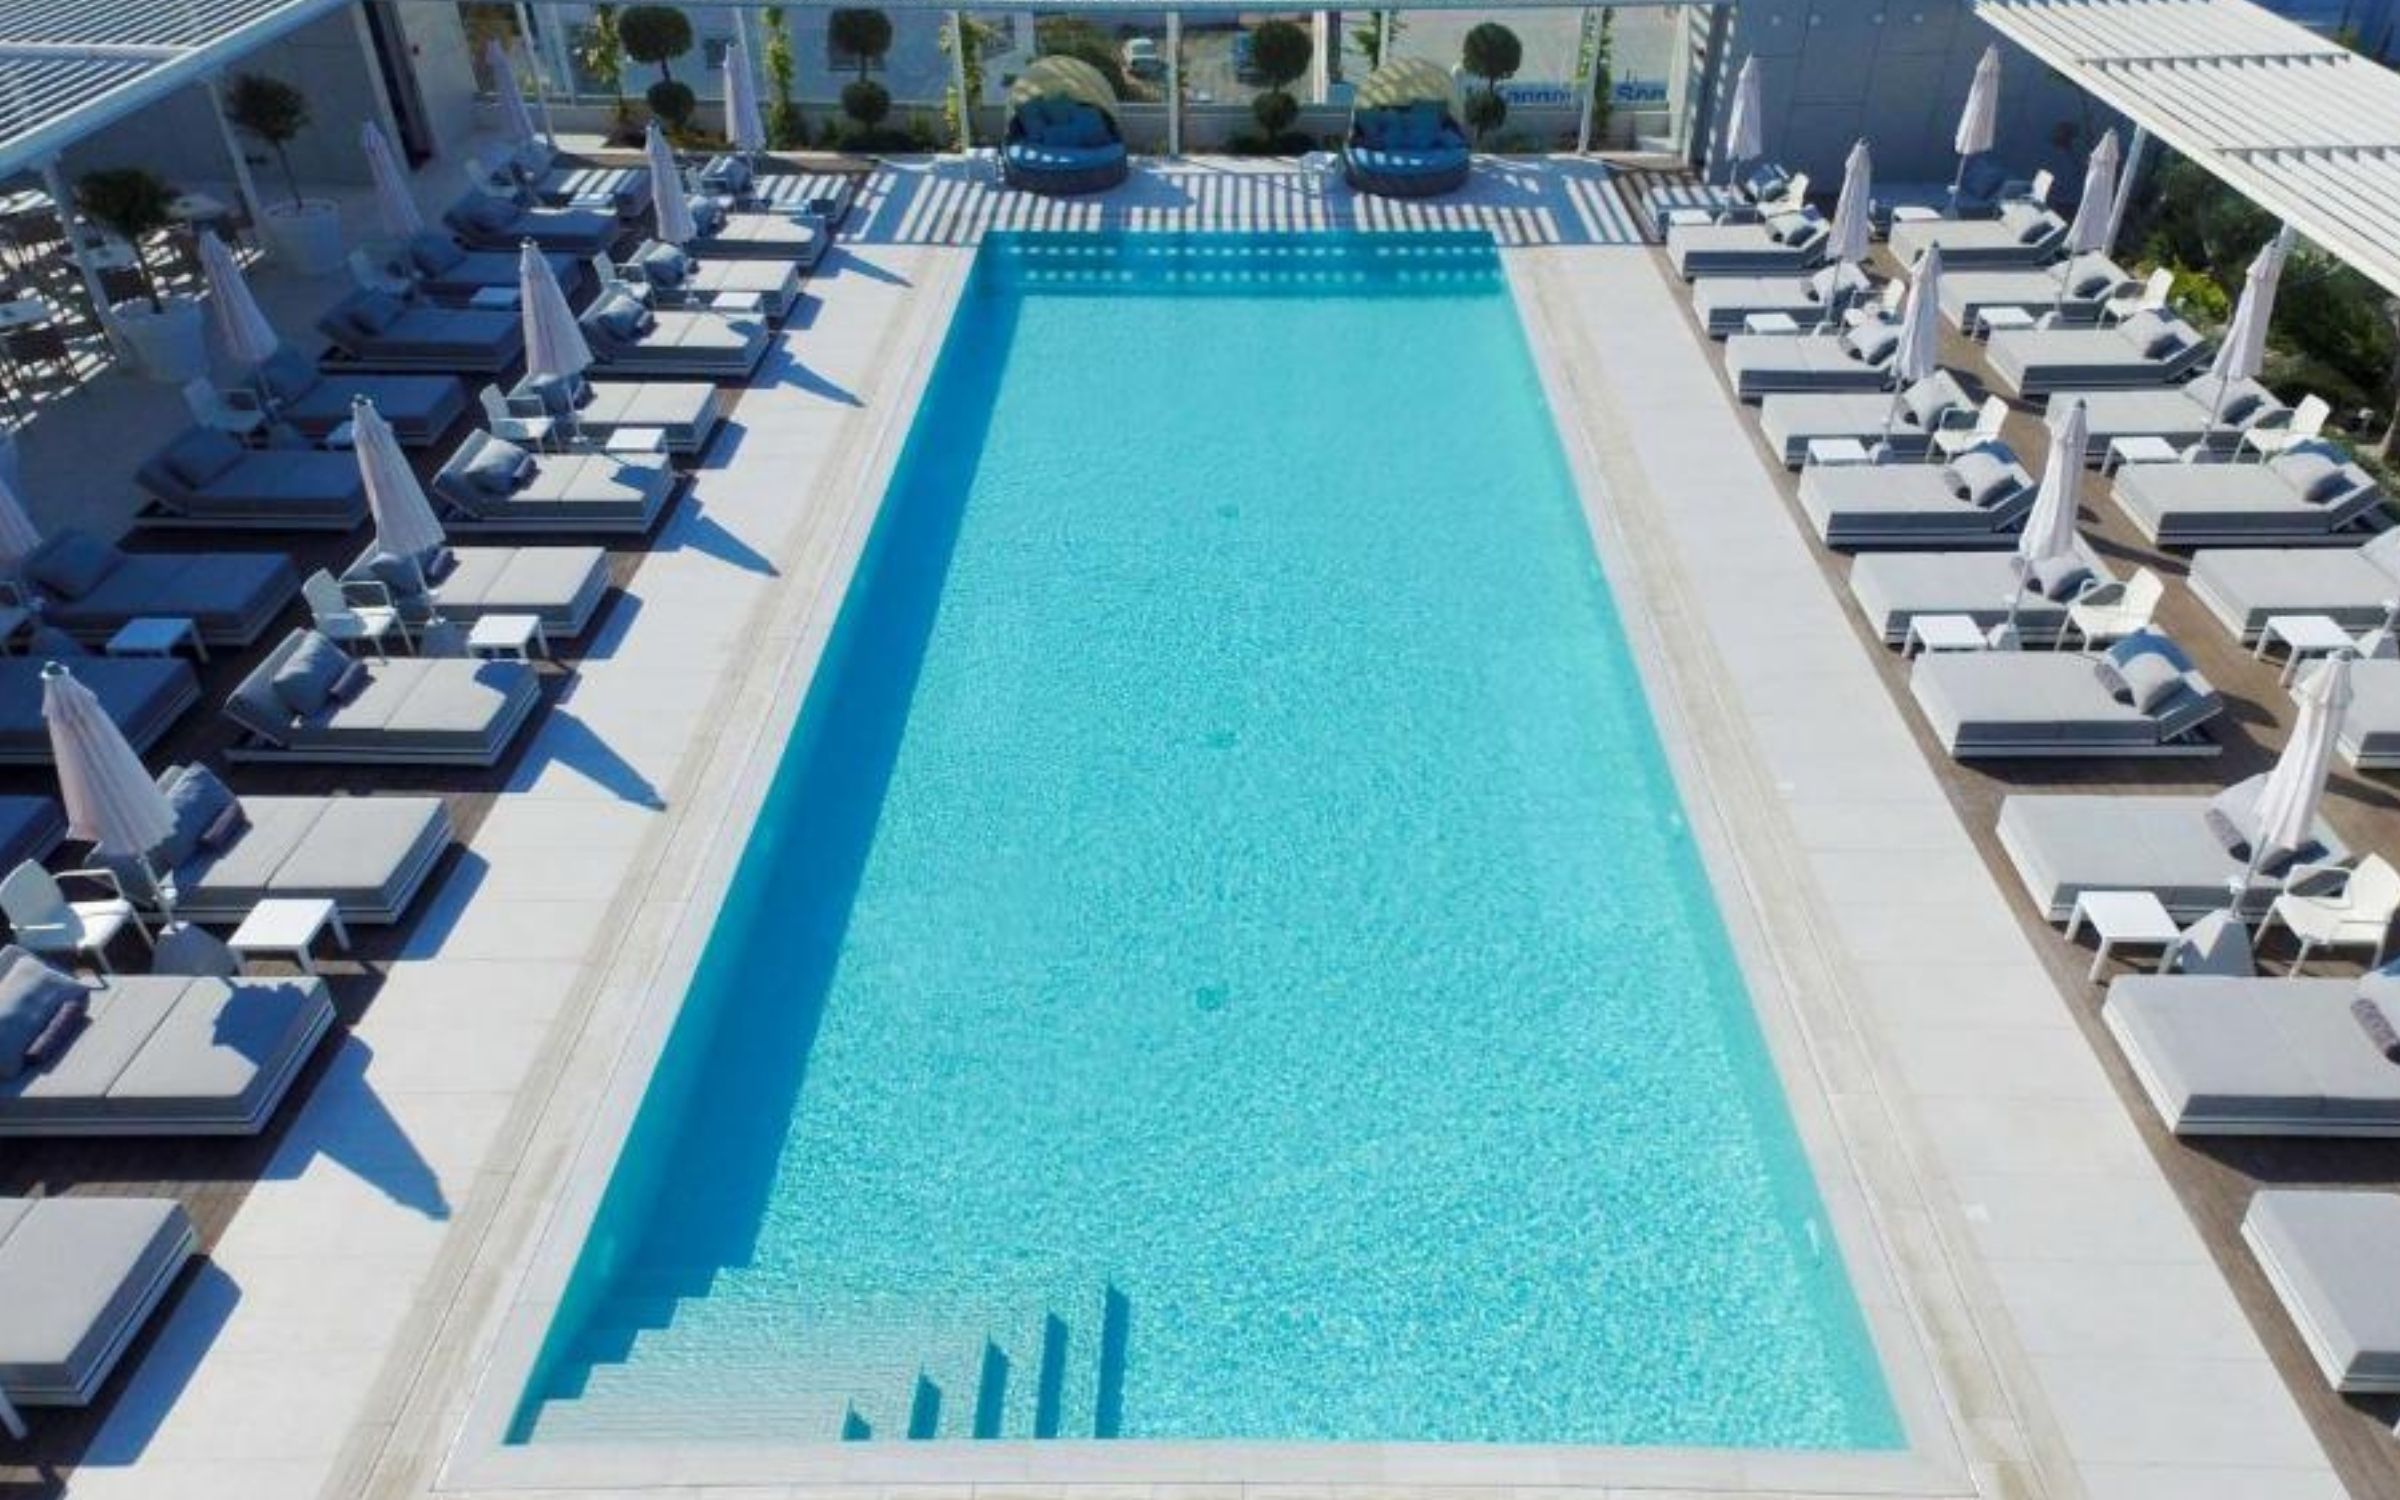 Radisson Blu Hotel, Larnaca in Cyprus